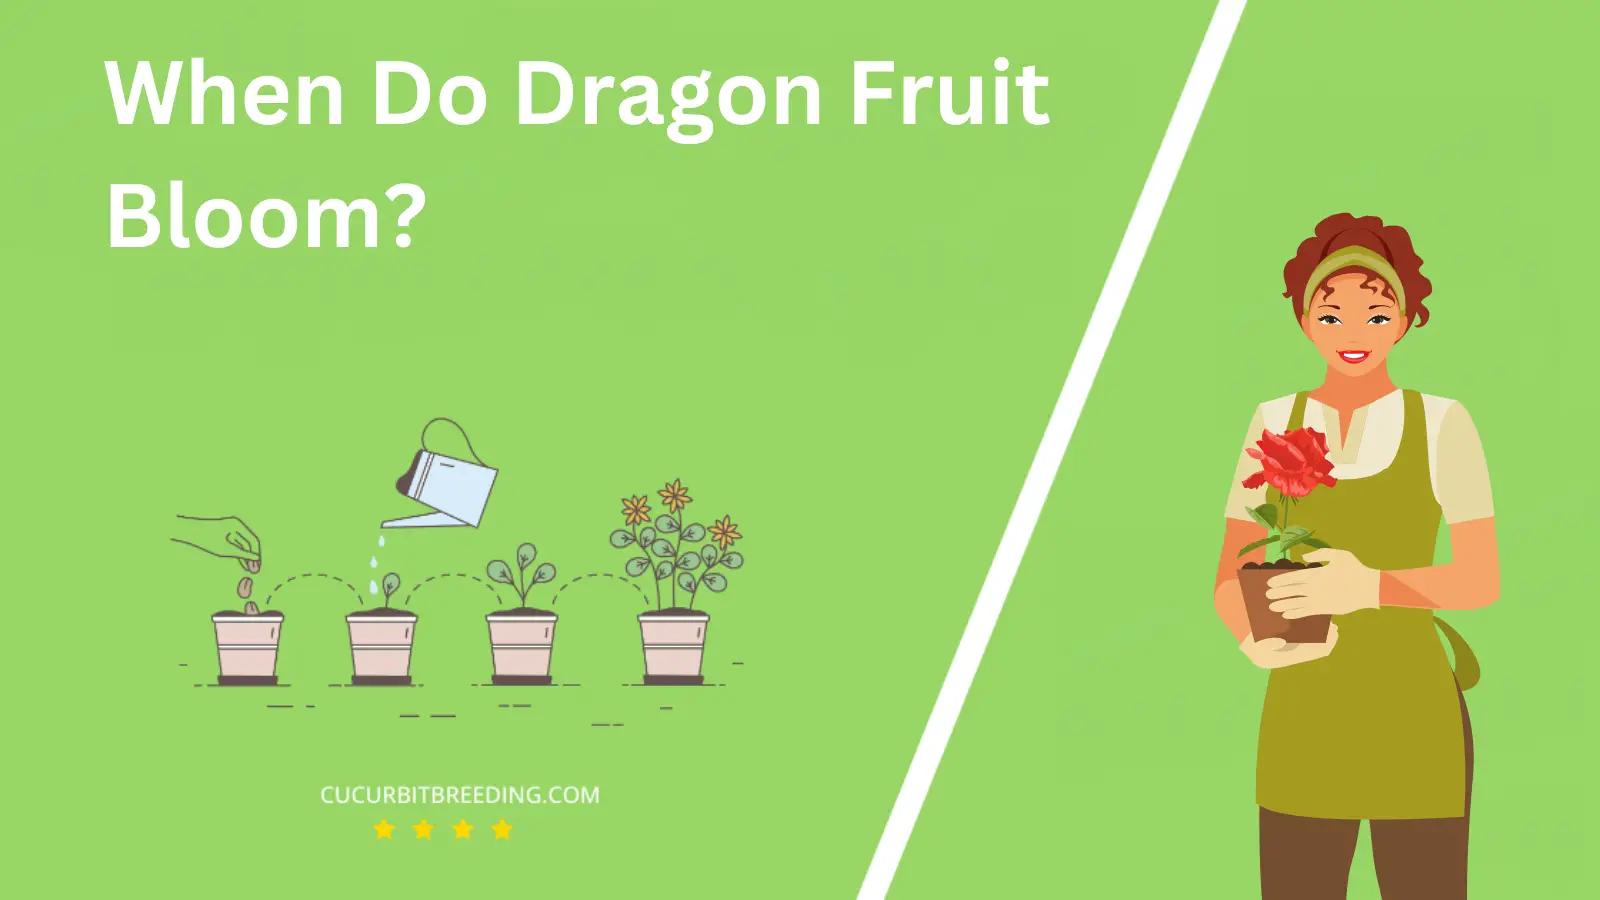 When Do Dragon Fruit Bloom?